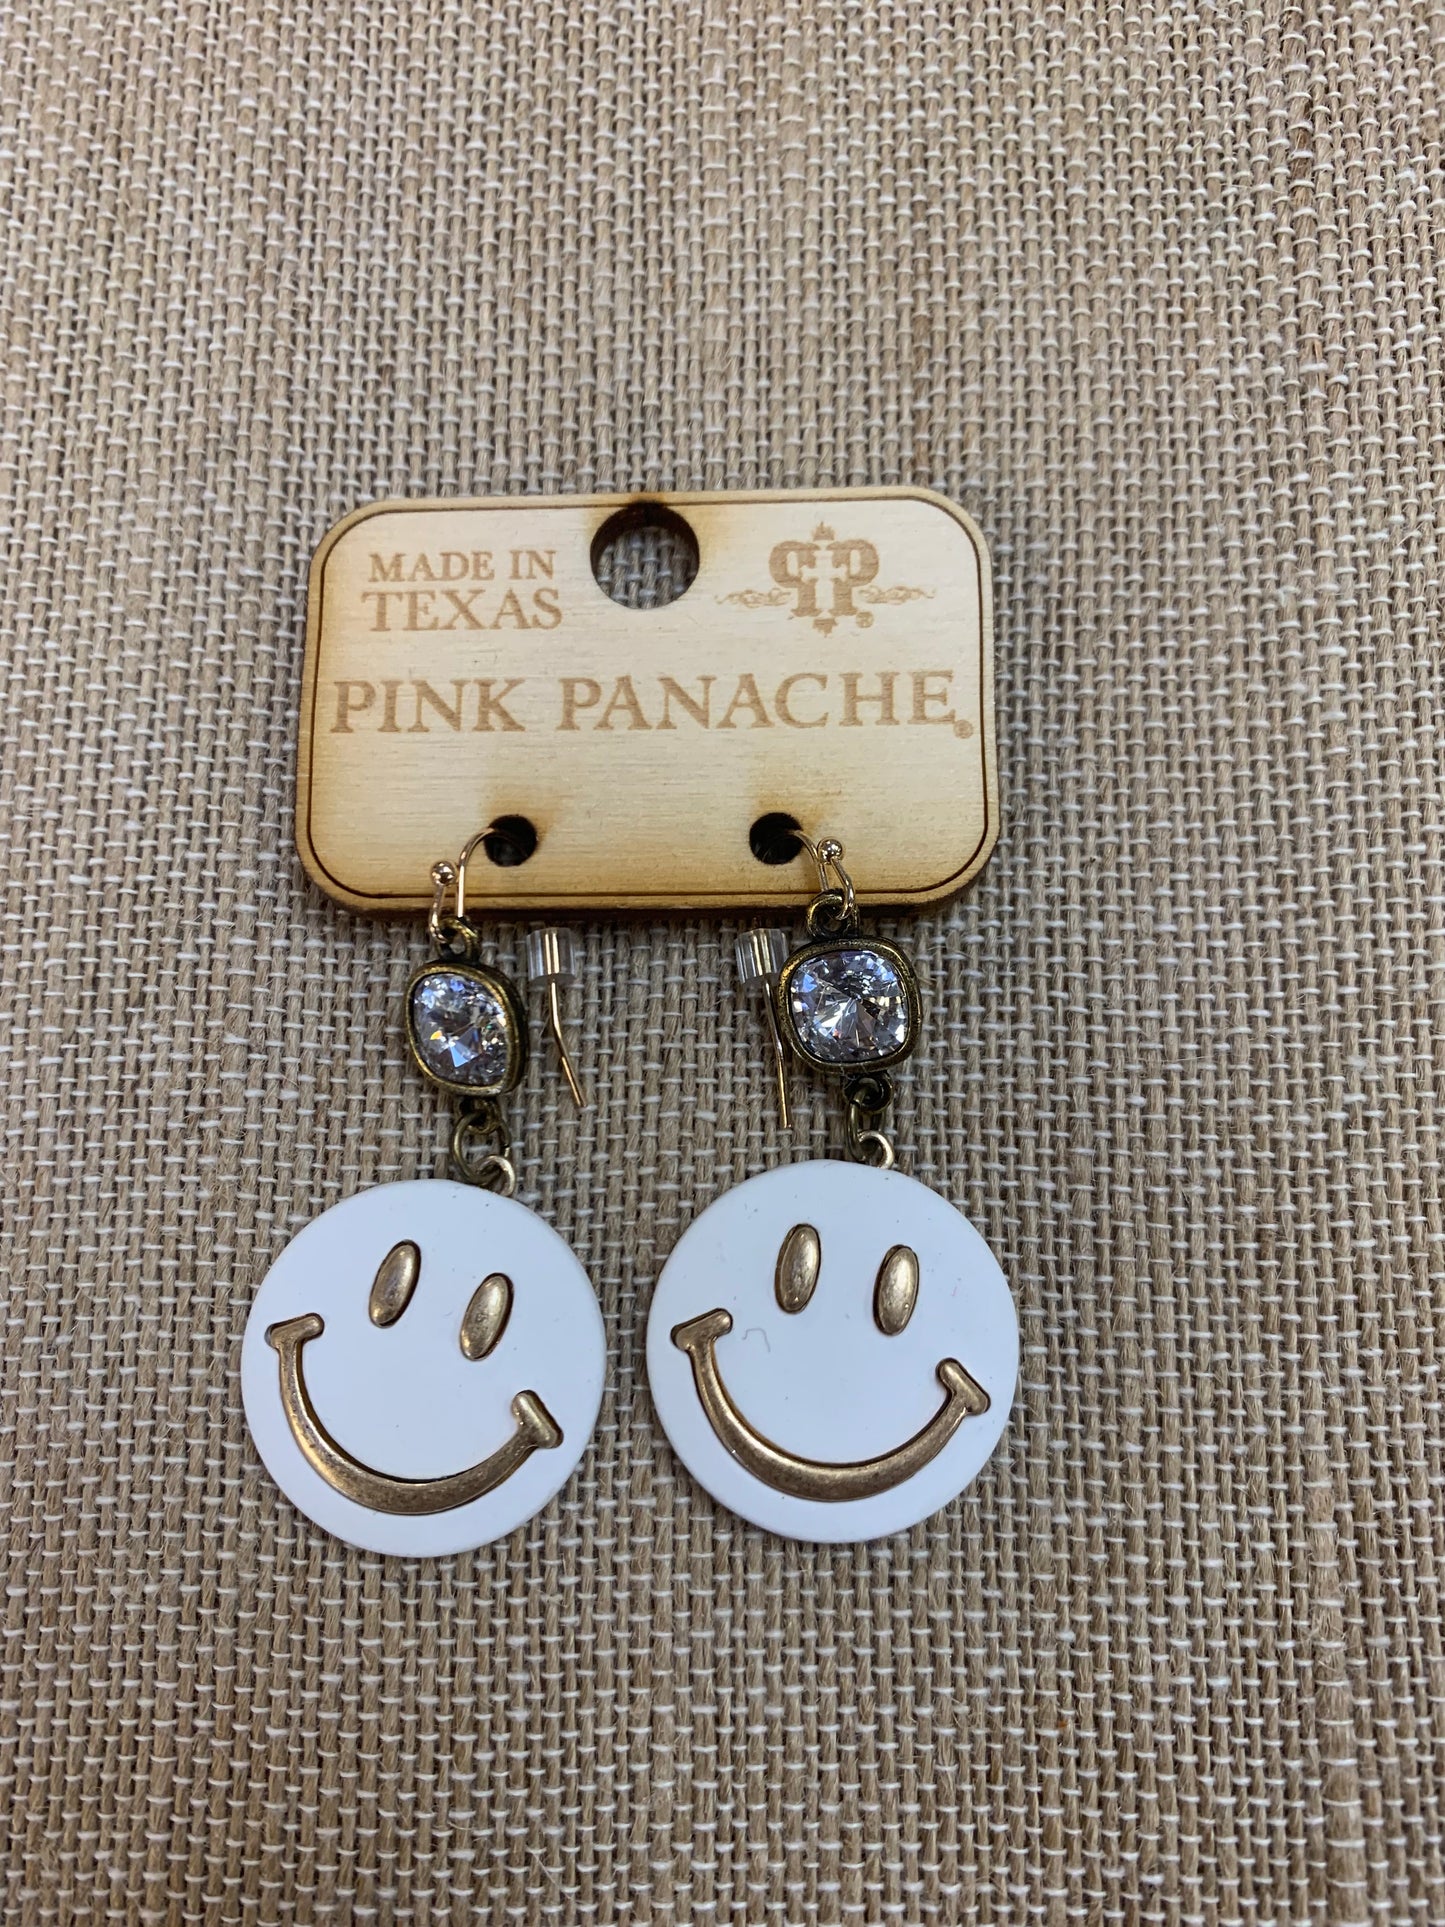 PINK PANACHE SMILEY FACE RHINESTONE DANGLE